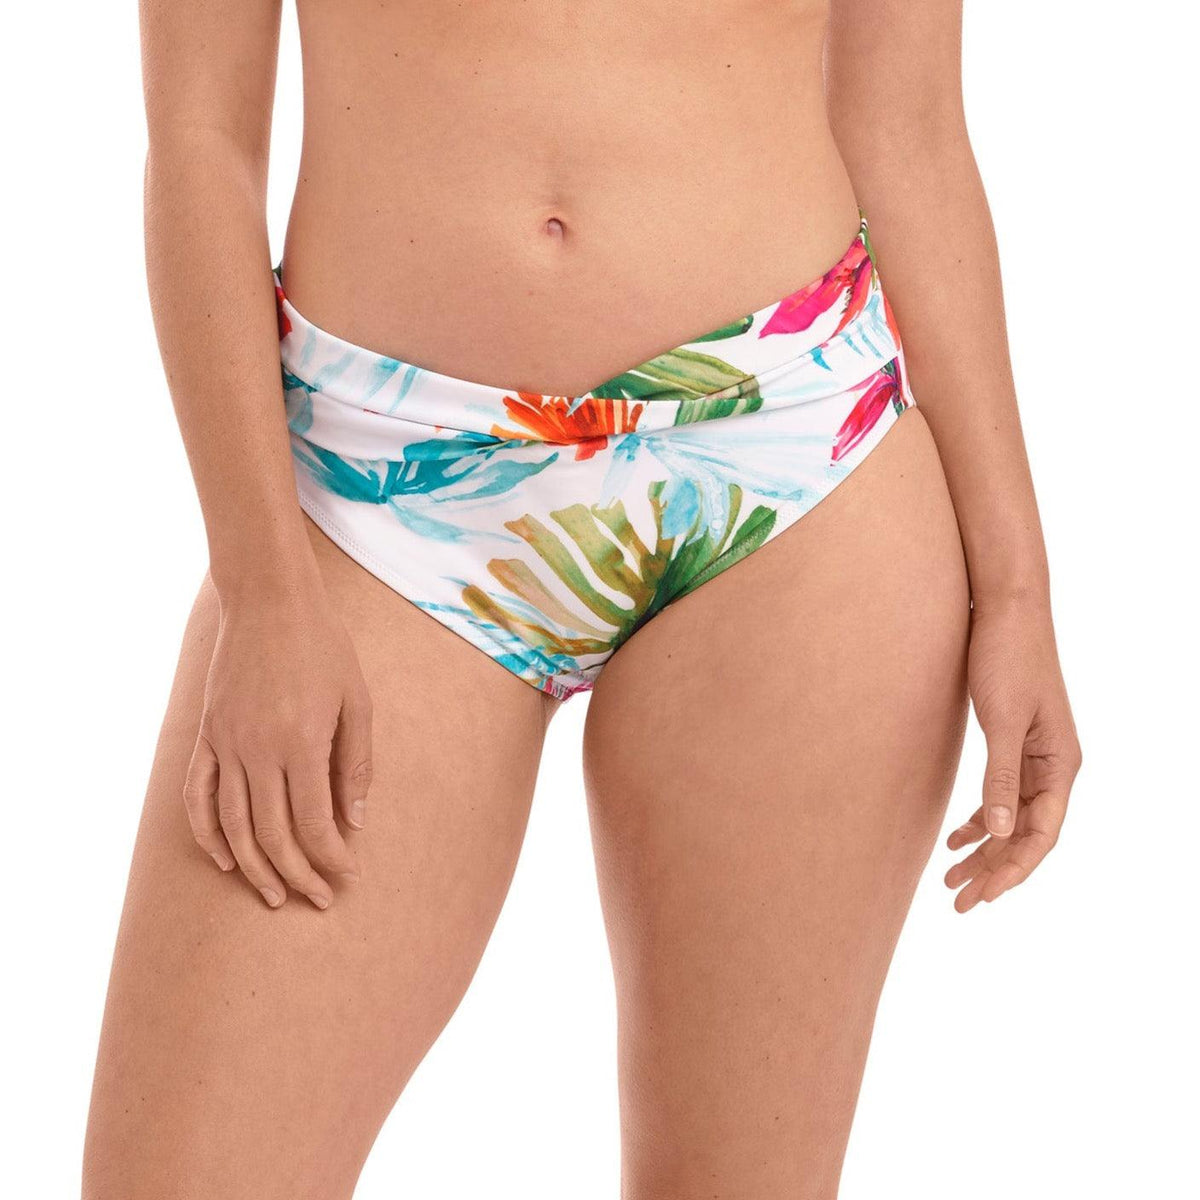 Fantasie "Kiawah Island" Bikini Brief - Lion's Lair Boutique - 2X, ALT, BIK, Bottom, Classic, Fantasie, Fashion, M, Pattern, S, SALE, Swimwear, White, XS - Fantasie